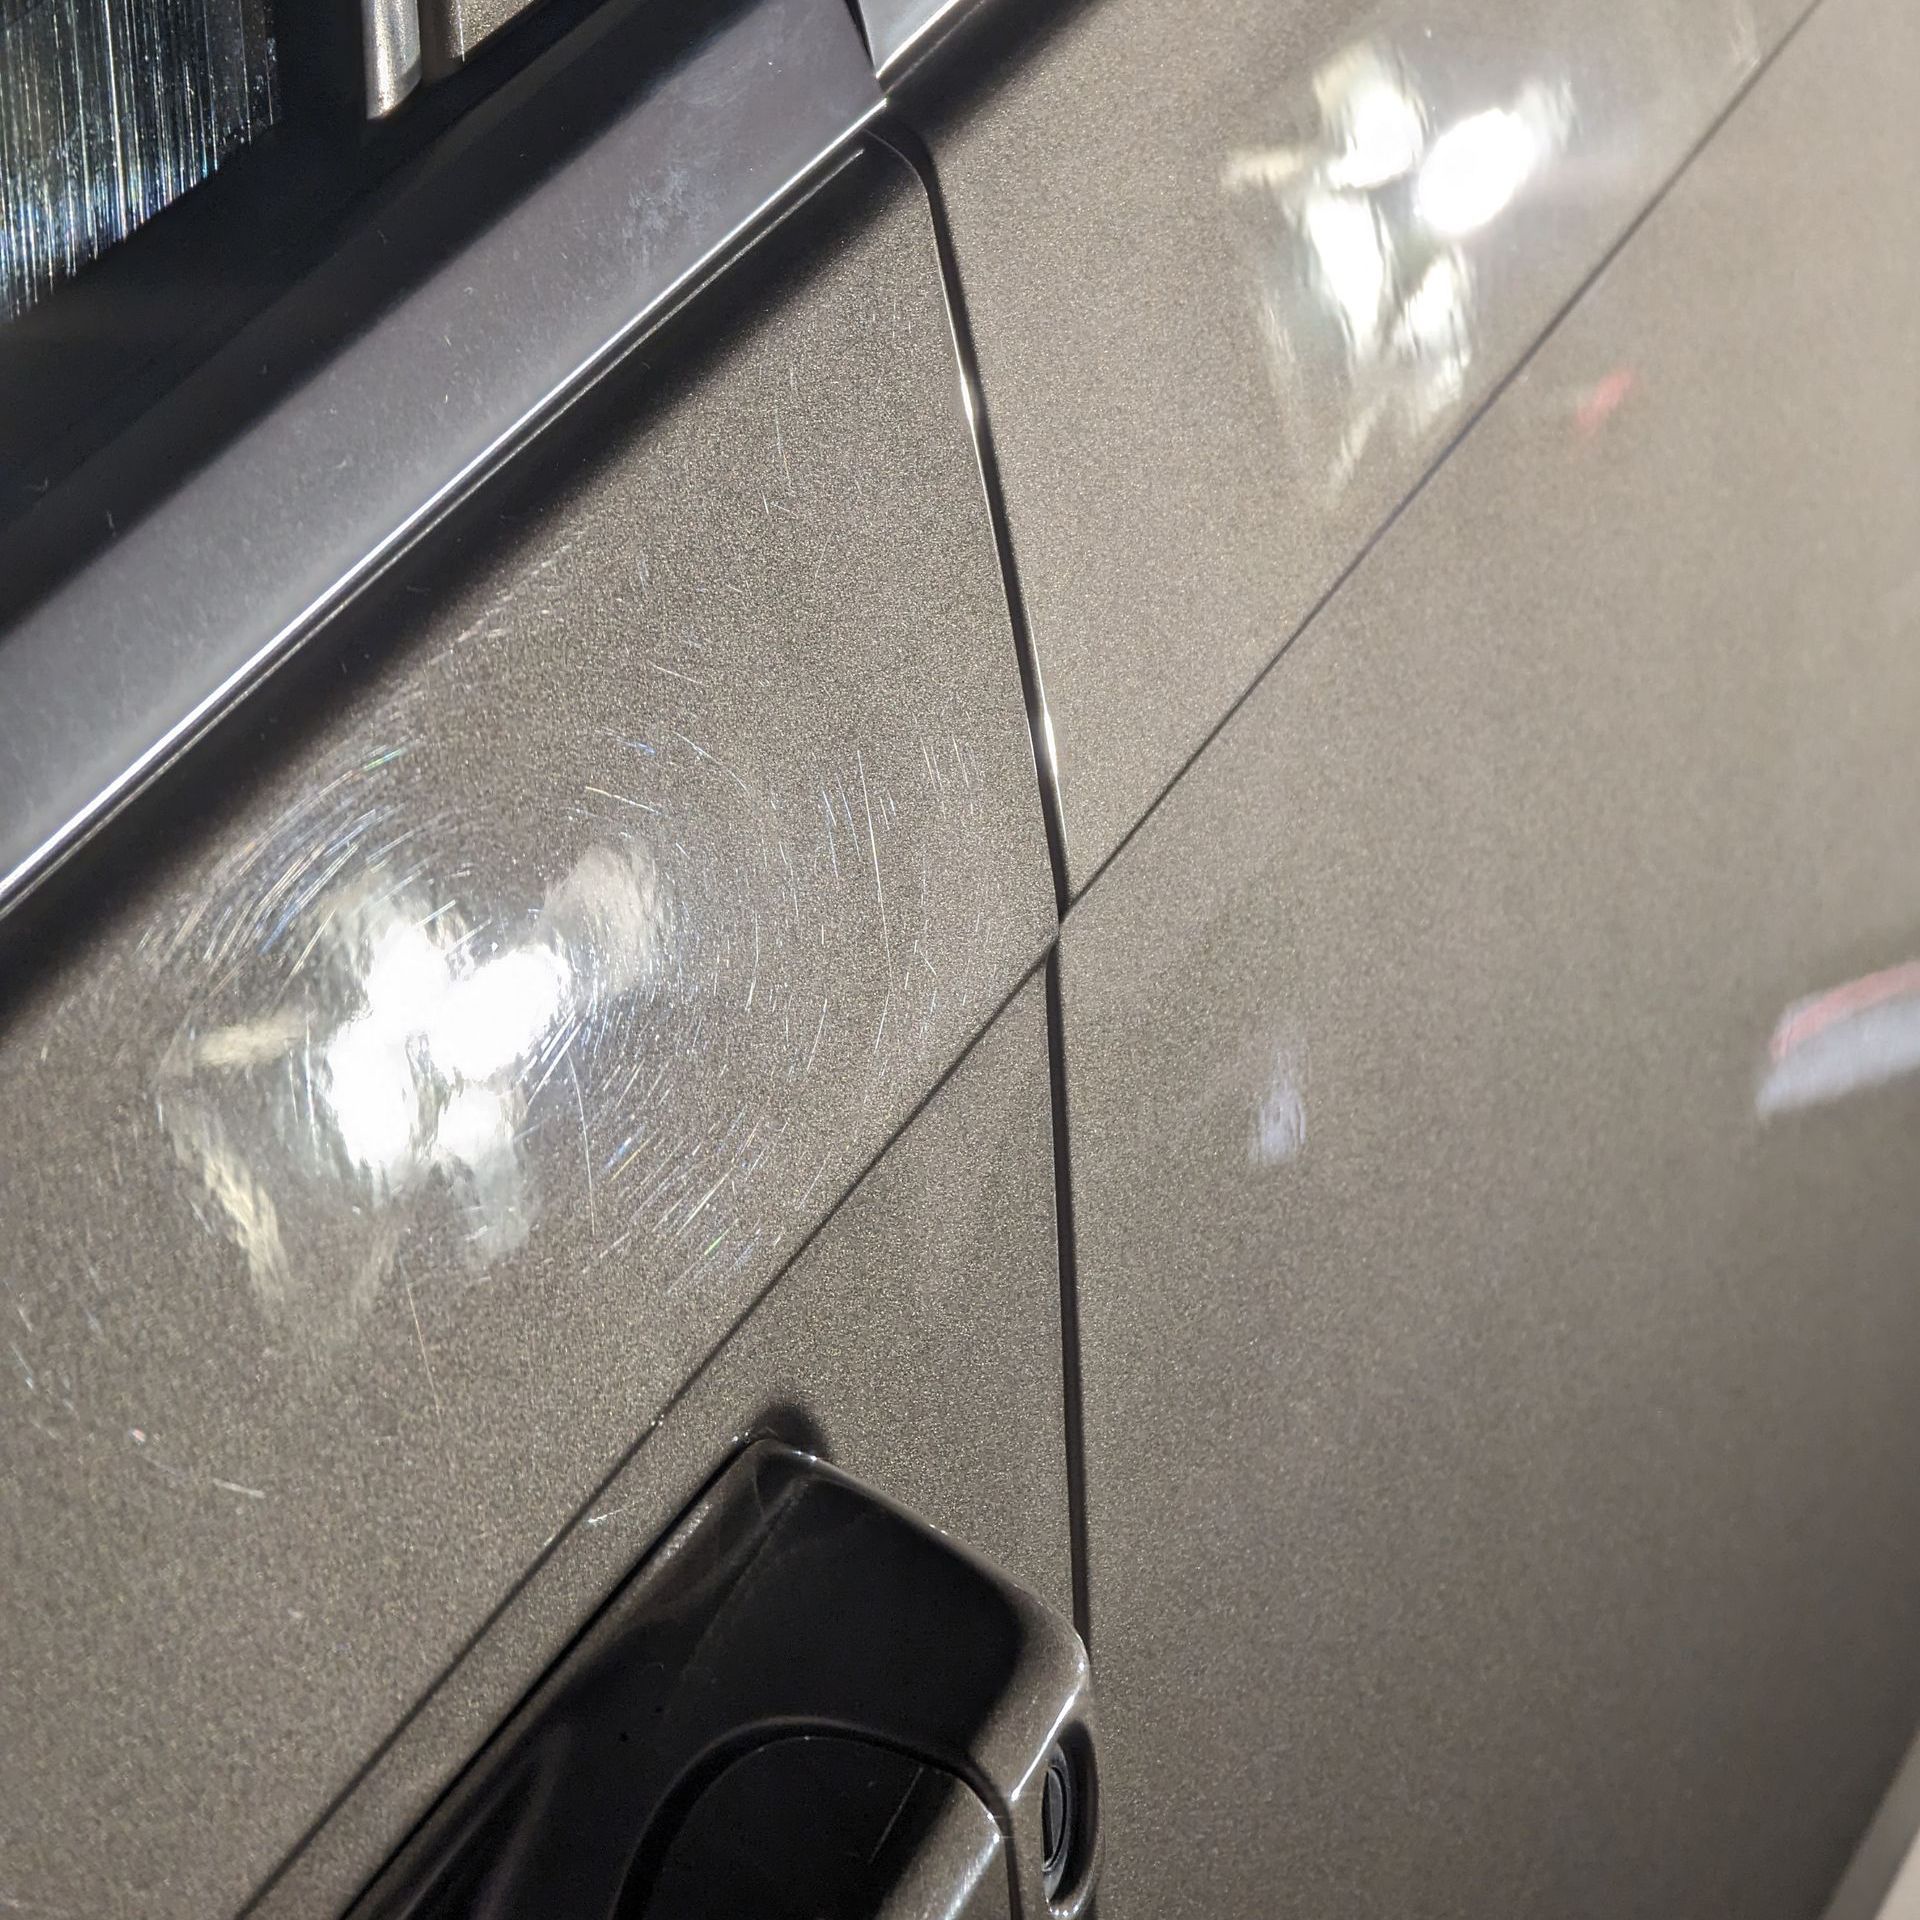 swirl marks on a car door